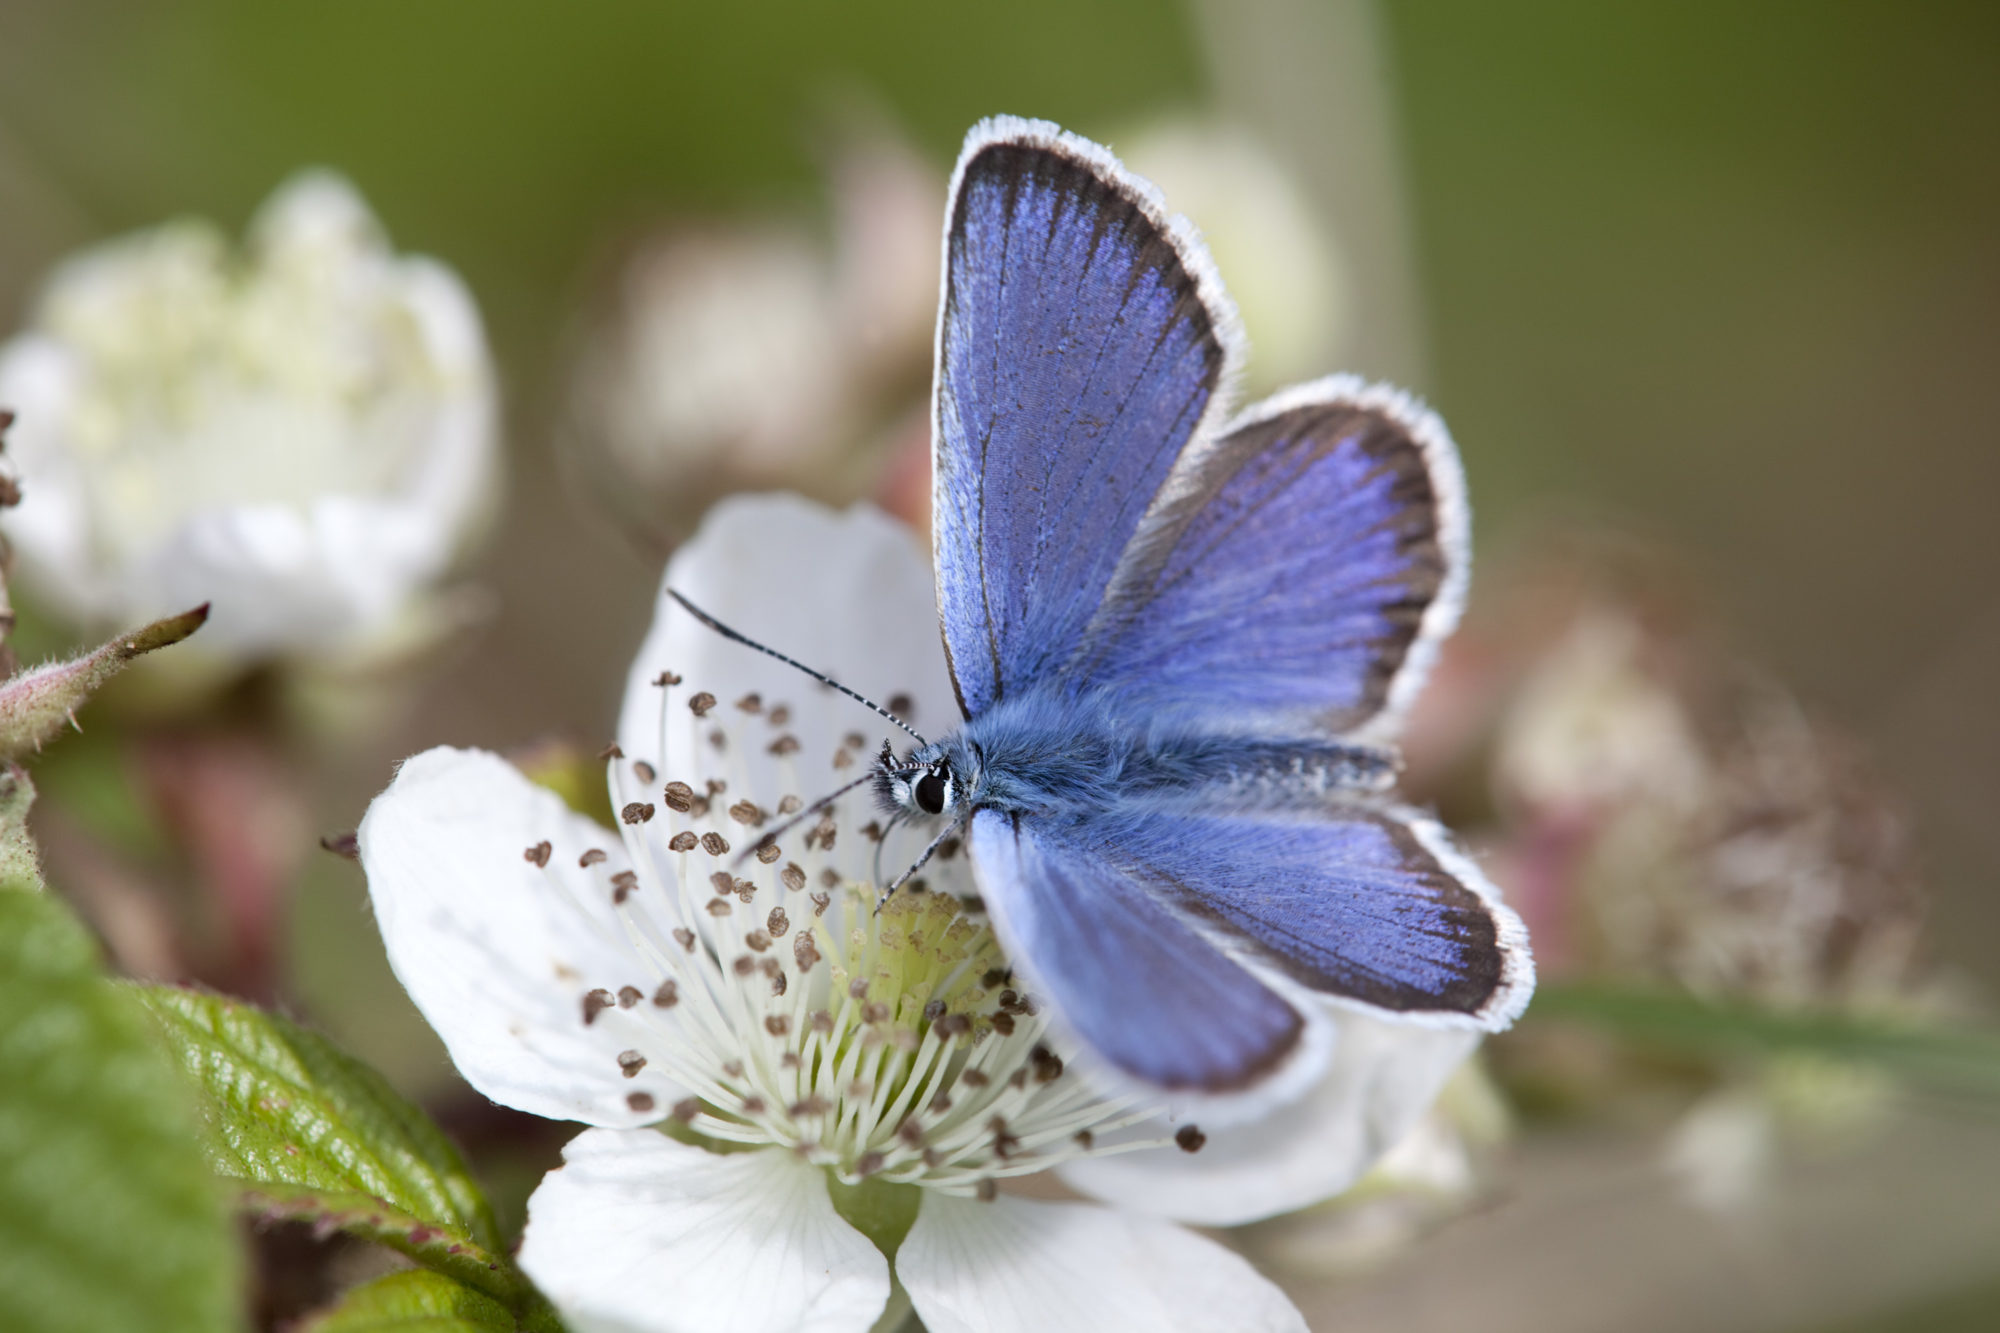 Male, Silver Studded Blue Butterfly. Credit: David Chapman